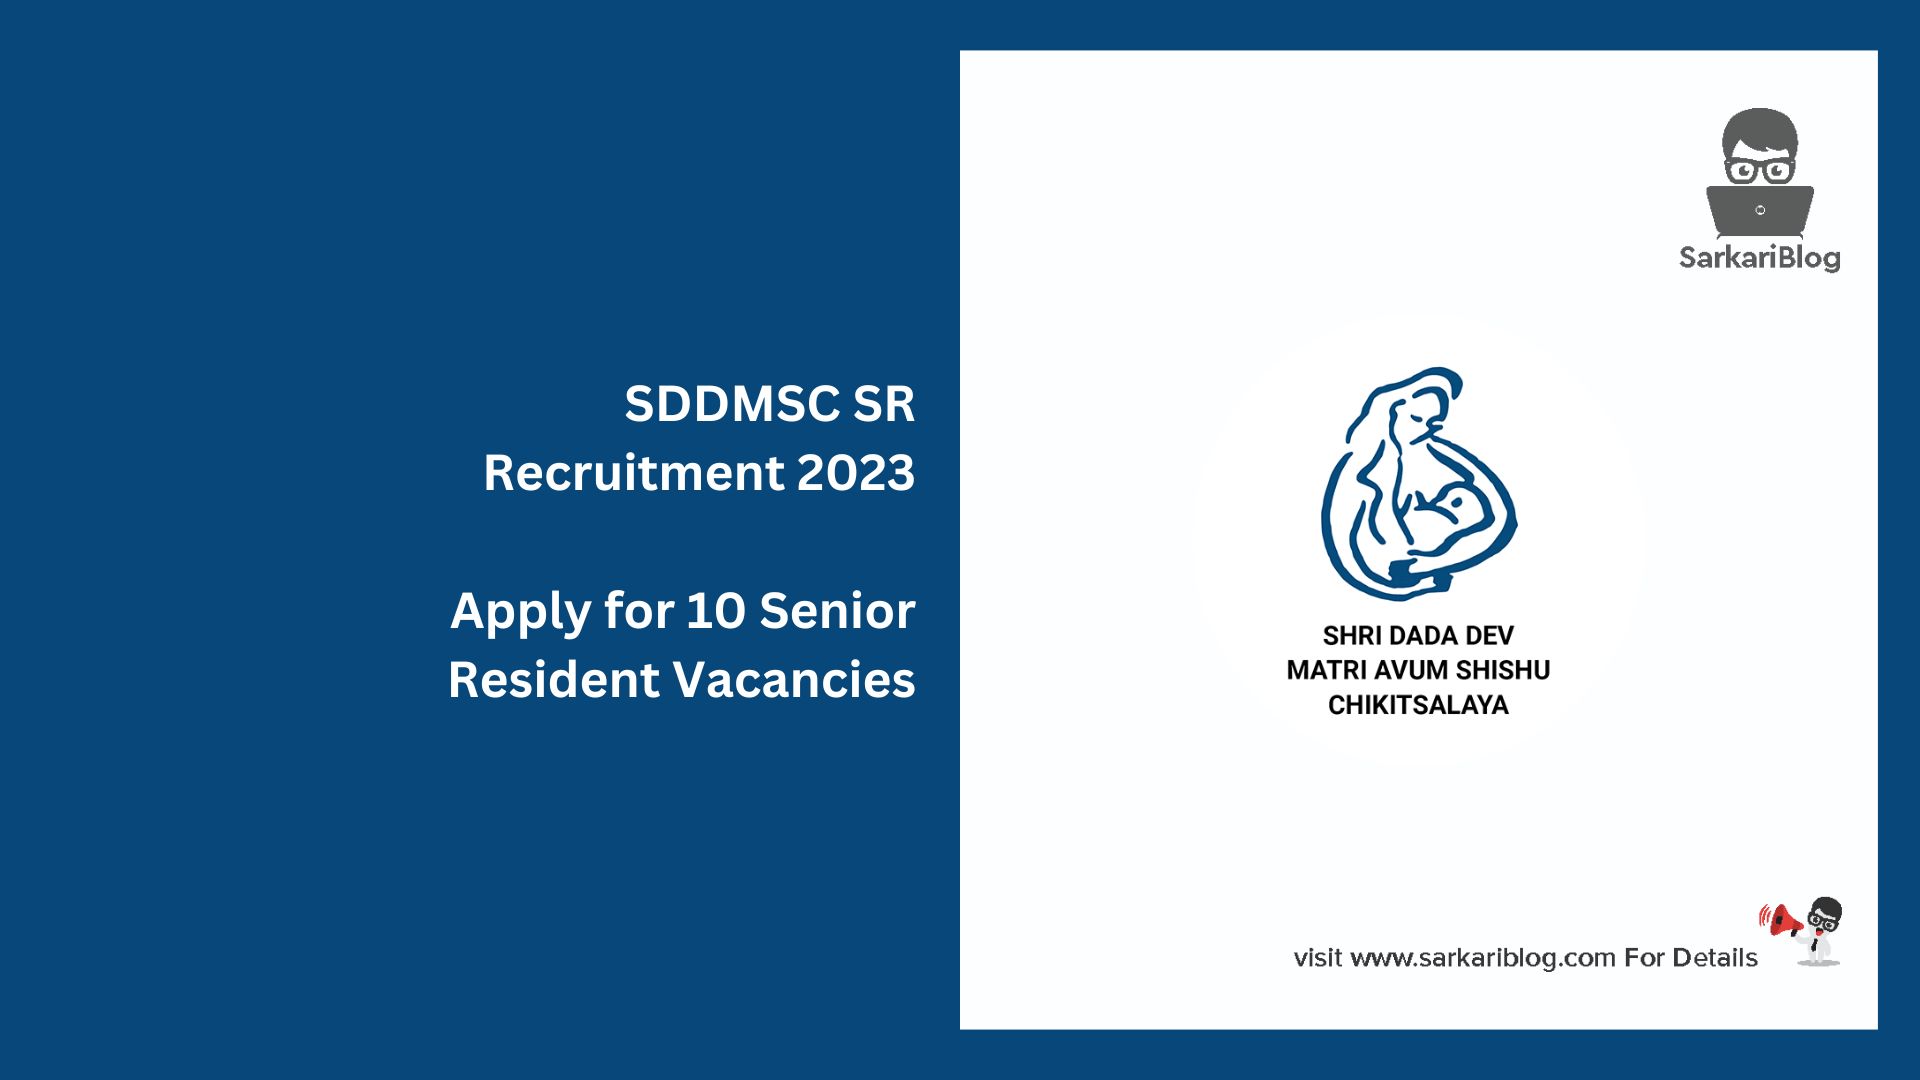 SDDMSC SR Recruitment 2023